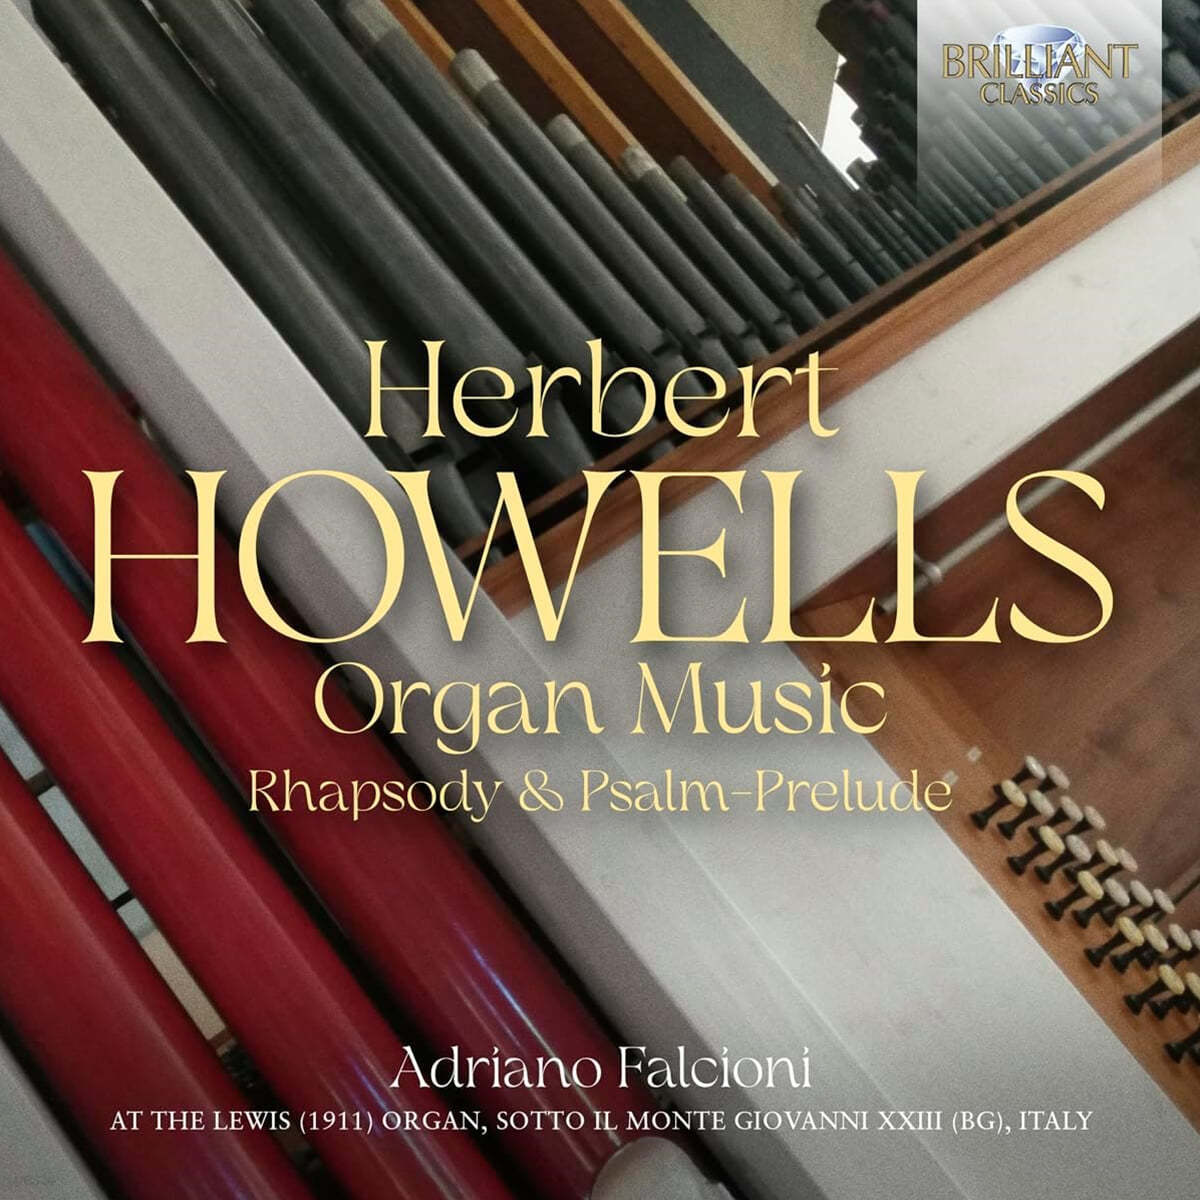 Adriano Falcioni 허버트 하웰스: 오르간 음악 (Howells: Organ Music; Rhapsody &amp; Psalm-Prelude)